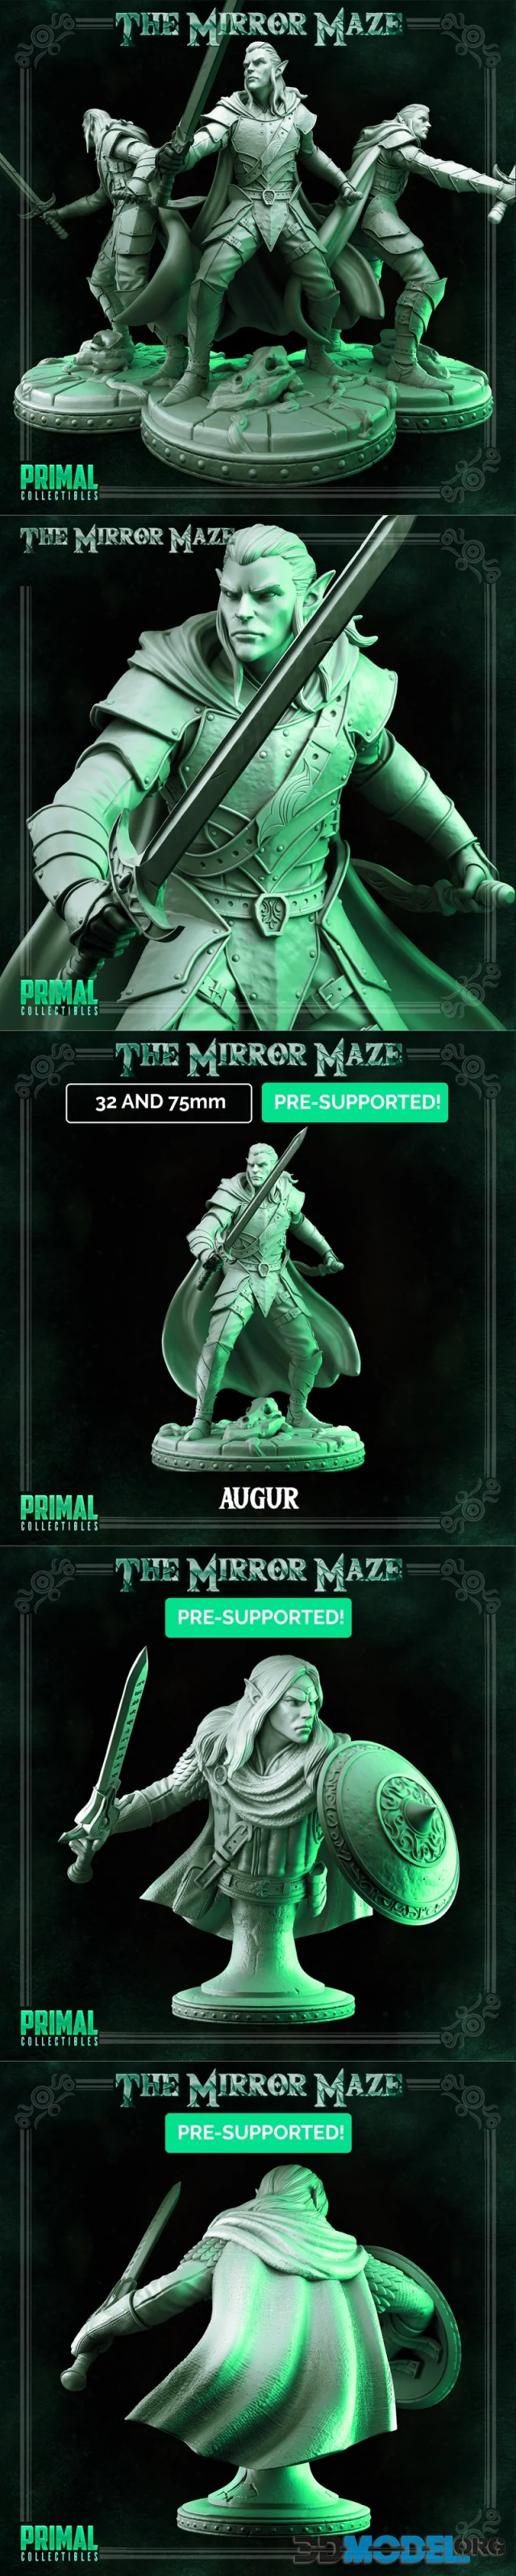 Primal Collectibles - Augur Elf Warrior and Athos Elf Hero Bust – Printable